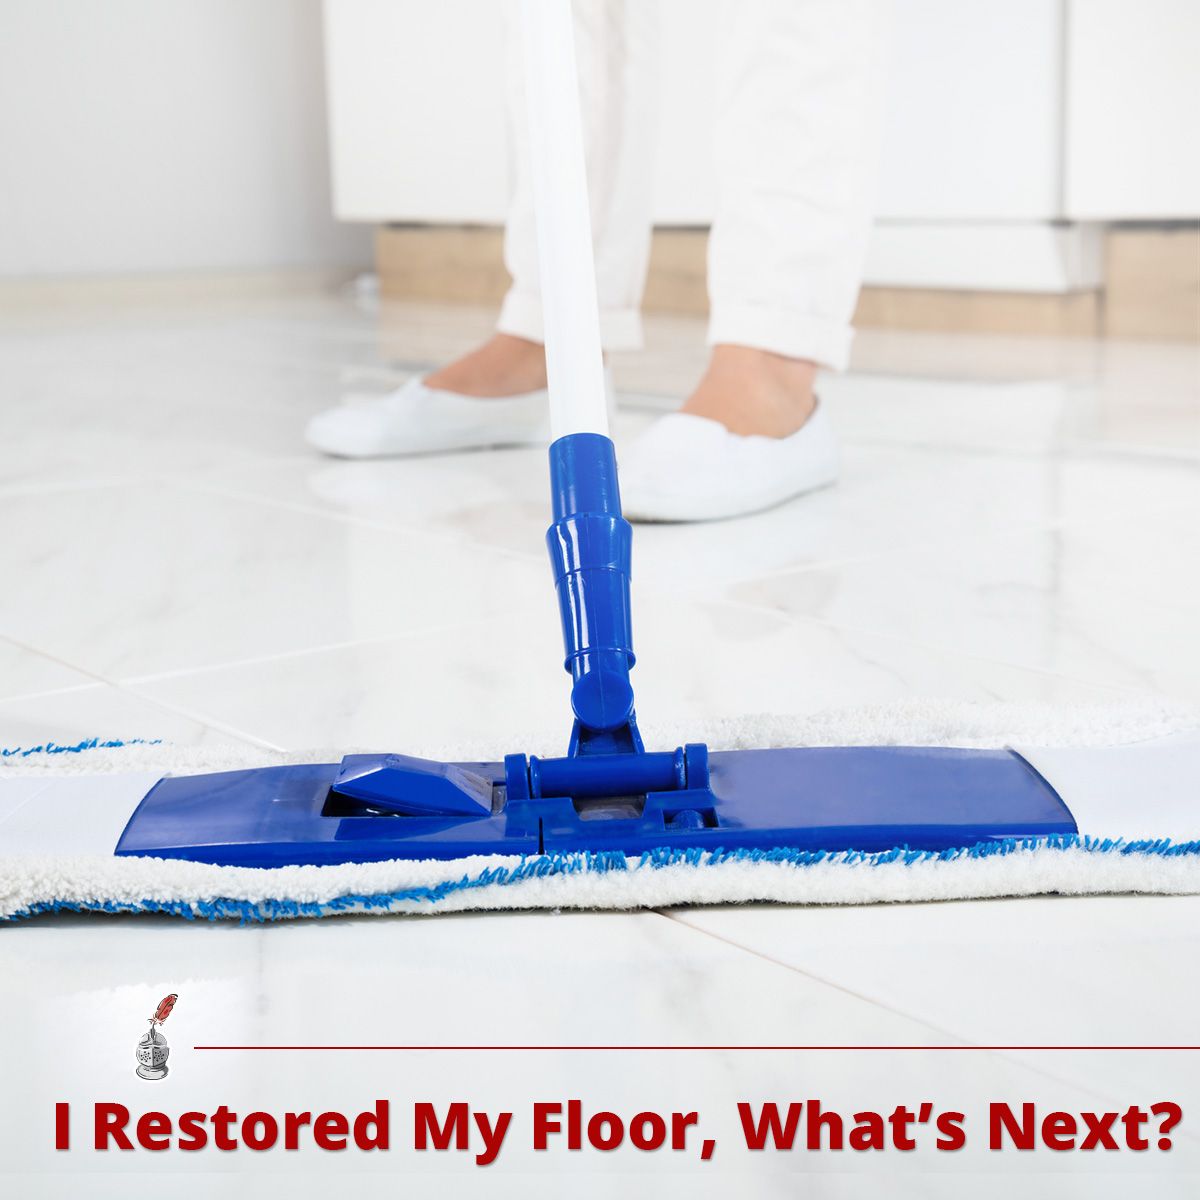 I Restored My Floor, What's Next?